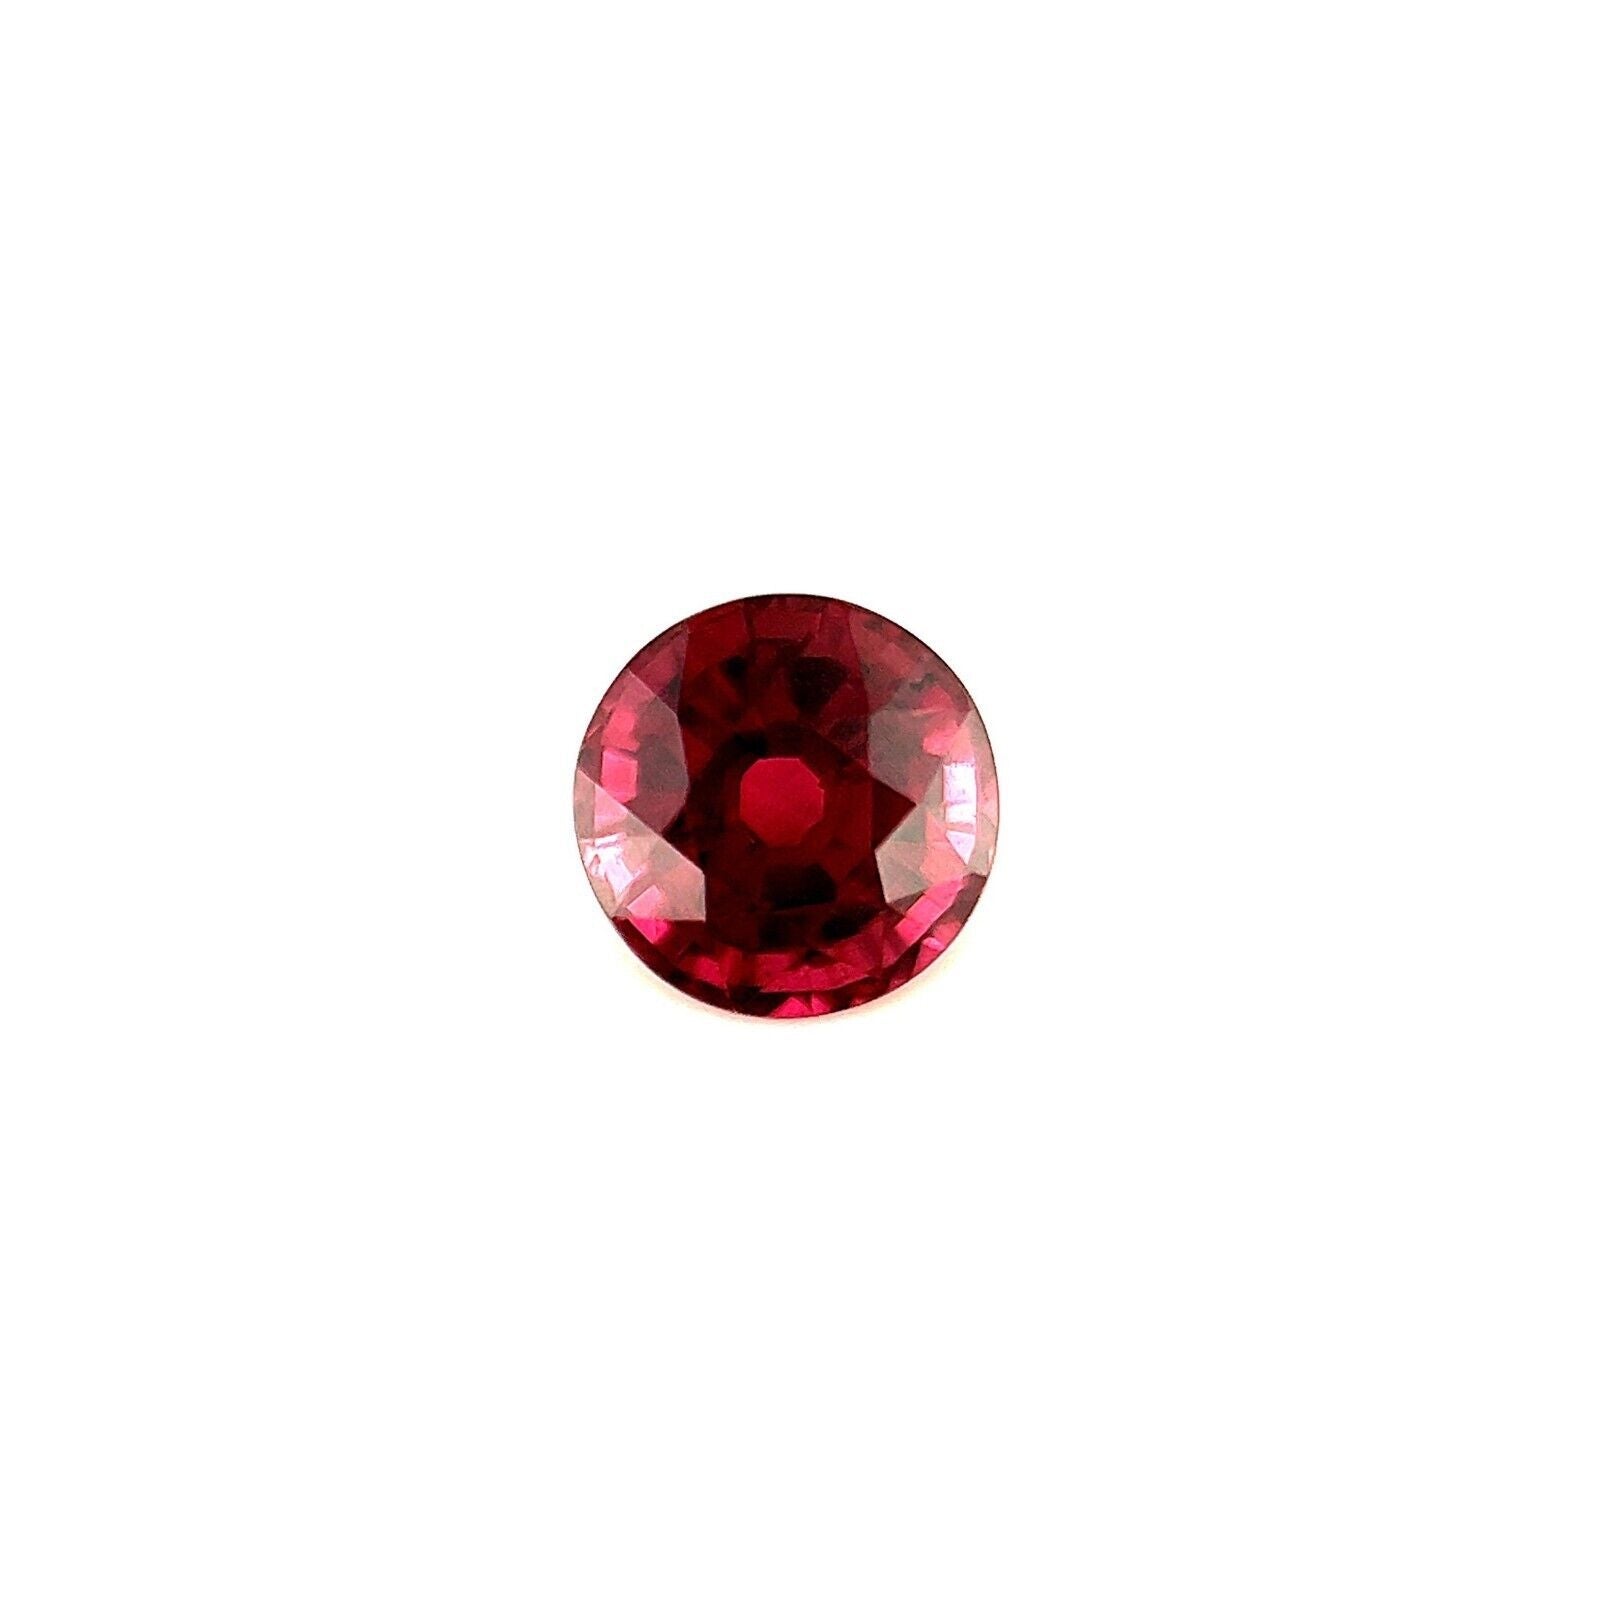 Pierre précieuse grenat rhodolite rose vif taille brillant rond de 6 mm, 1,29 carat